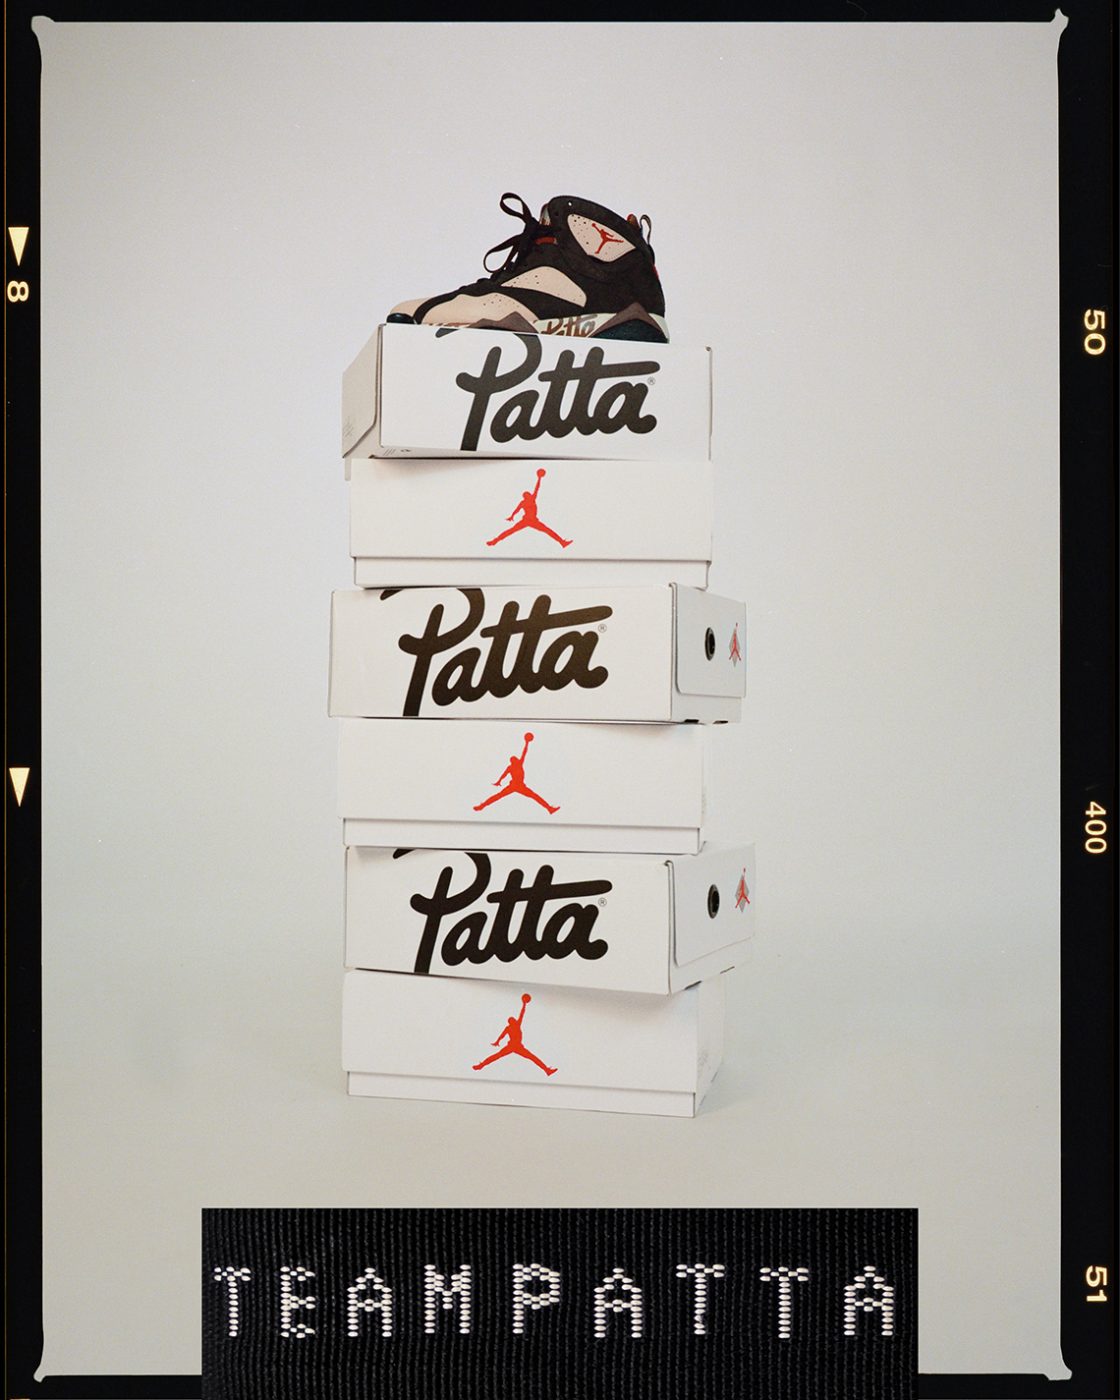 patta-air-jordan-7-collection-release-date-10